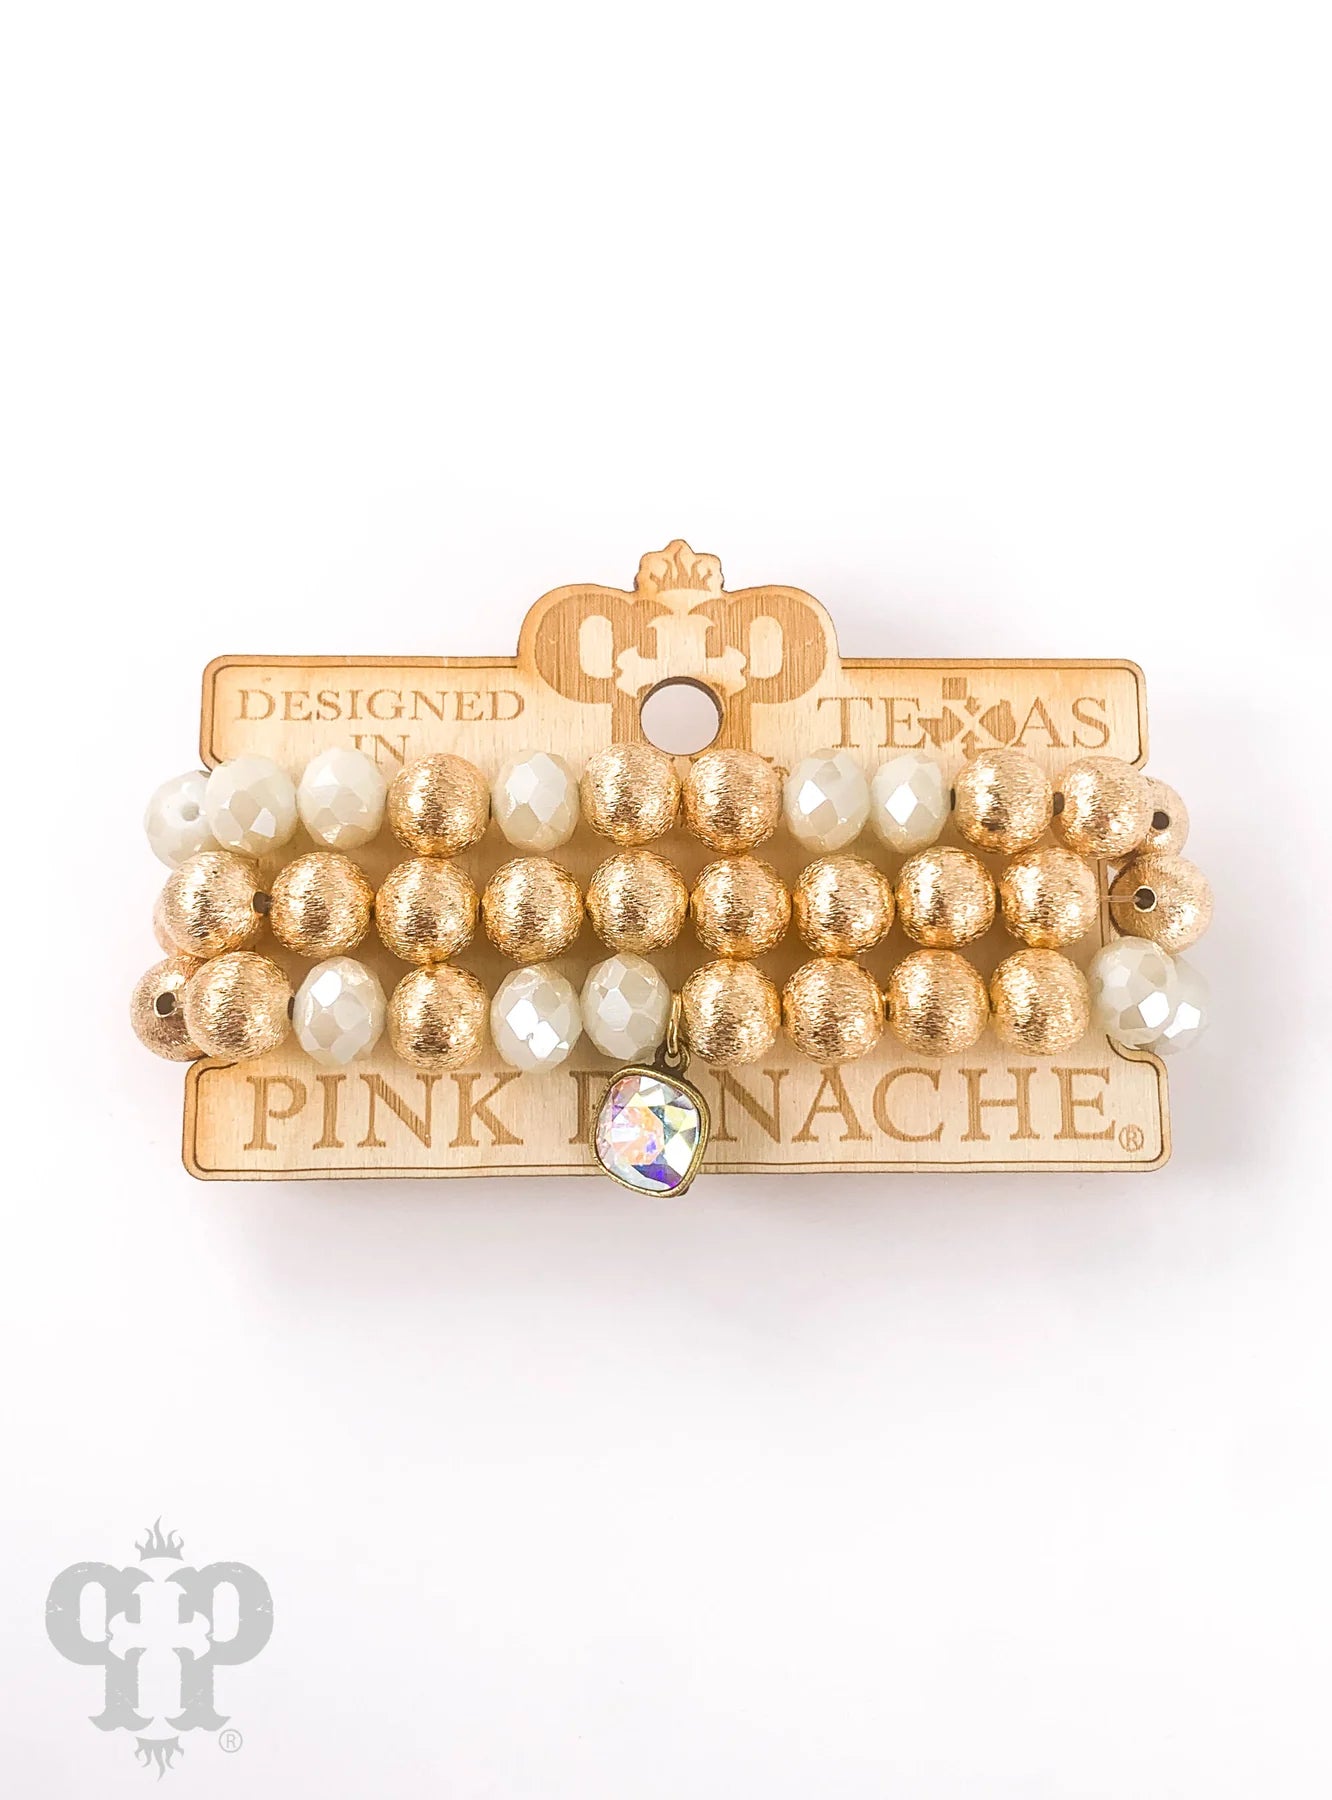 3 set cream and gold pink panache bracelet